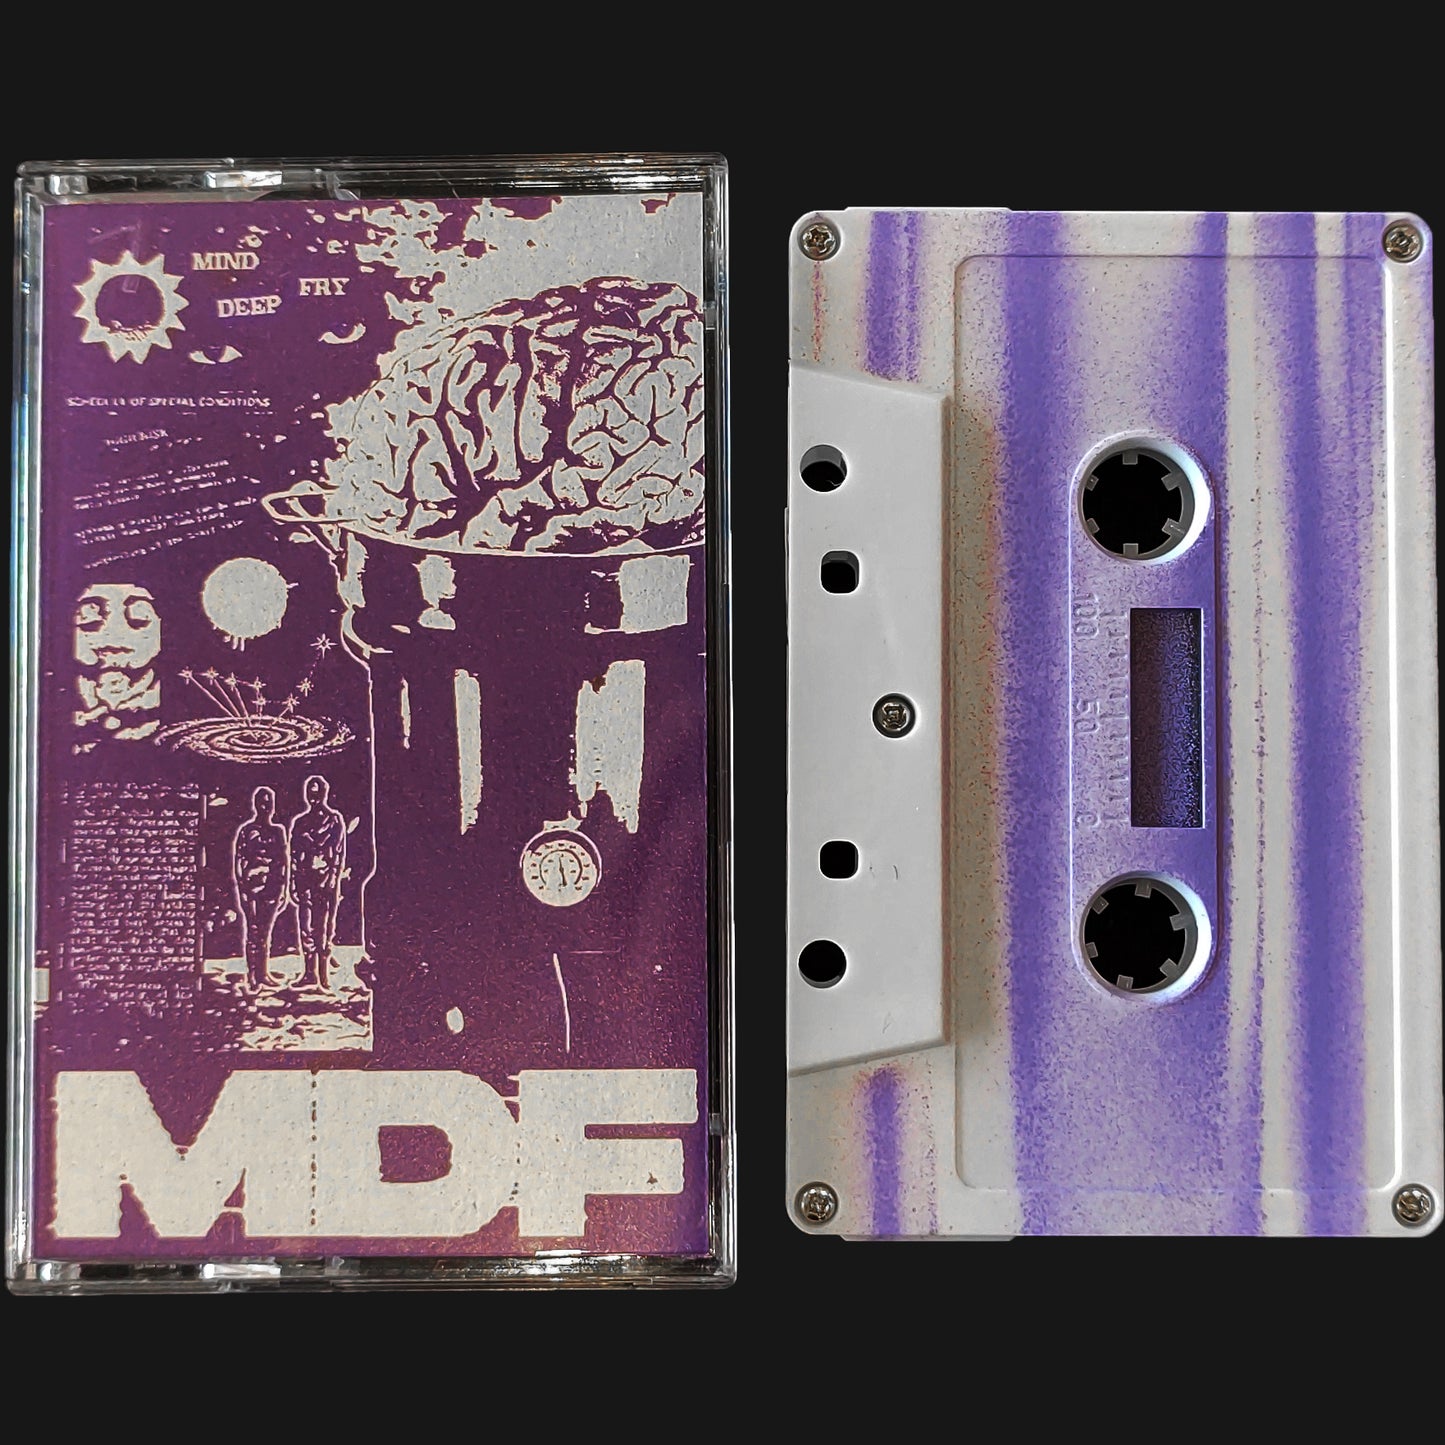 MDF - "MIND DEEP FRY" CS